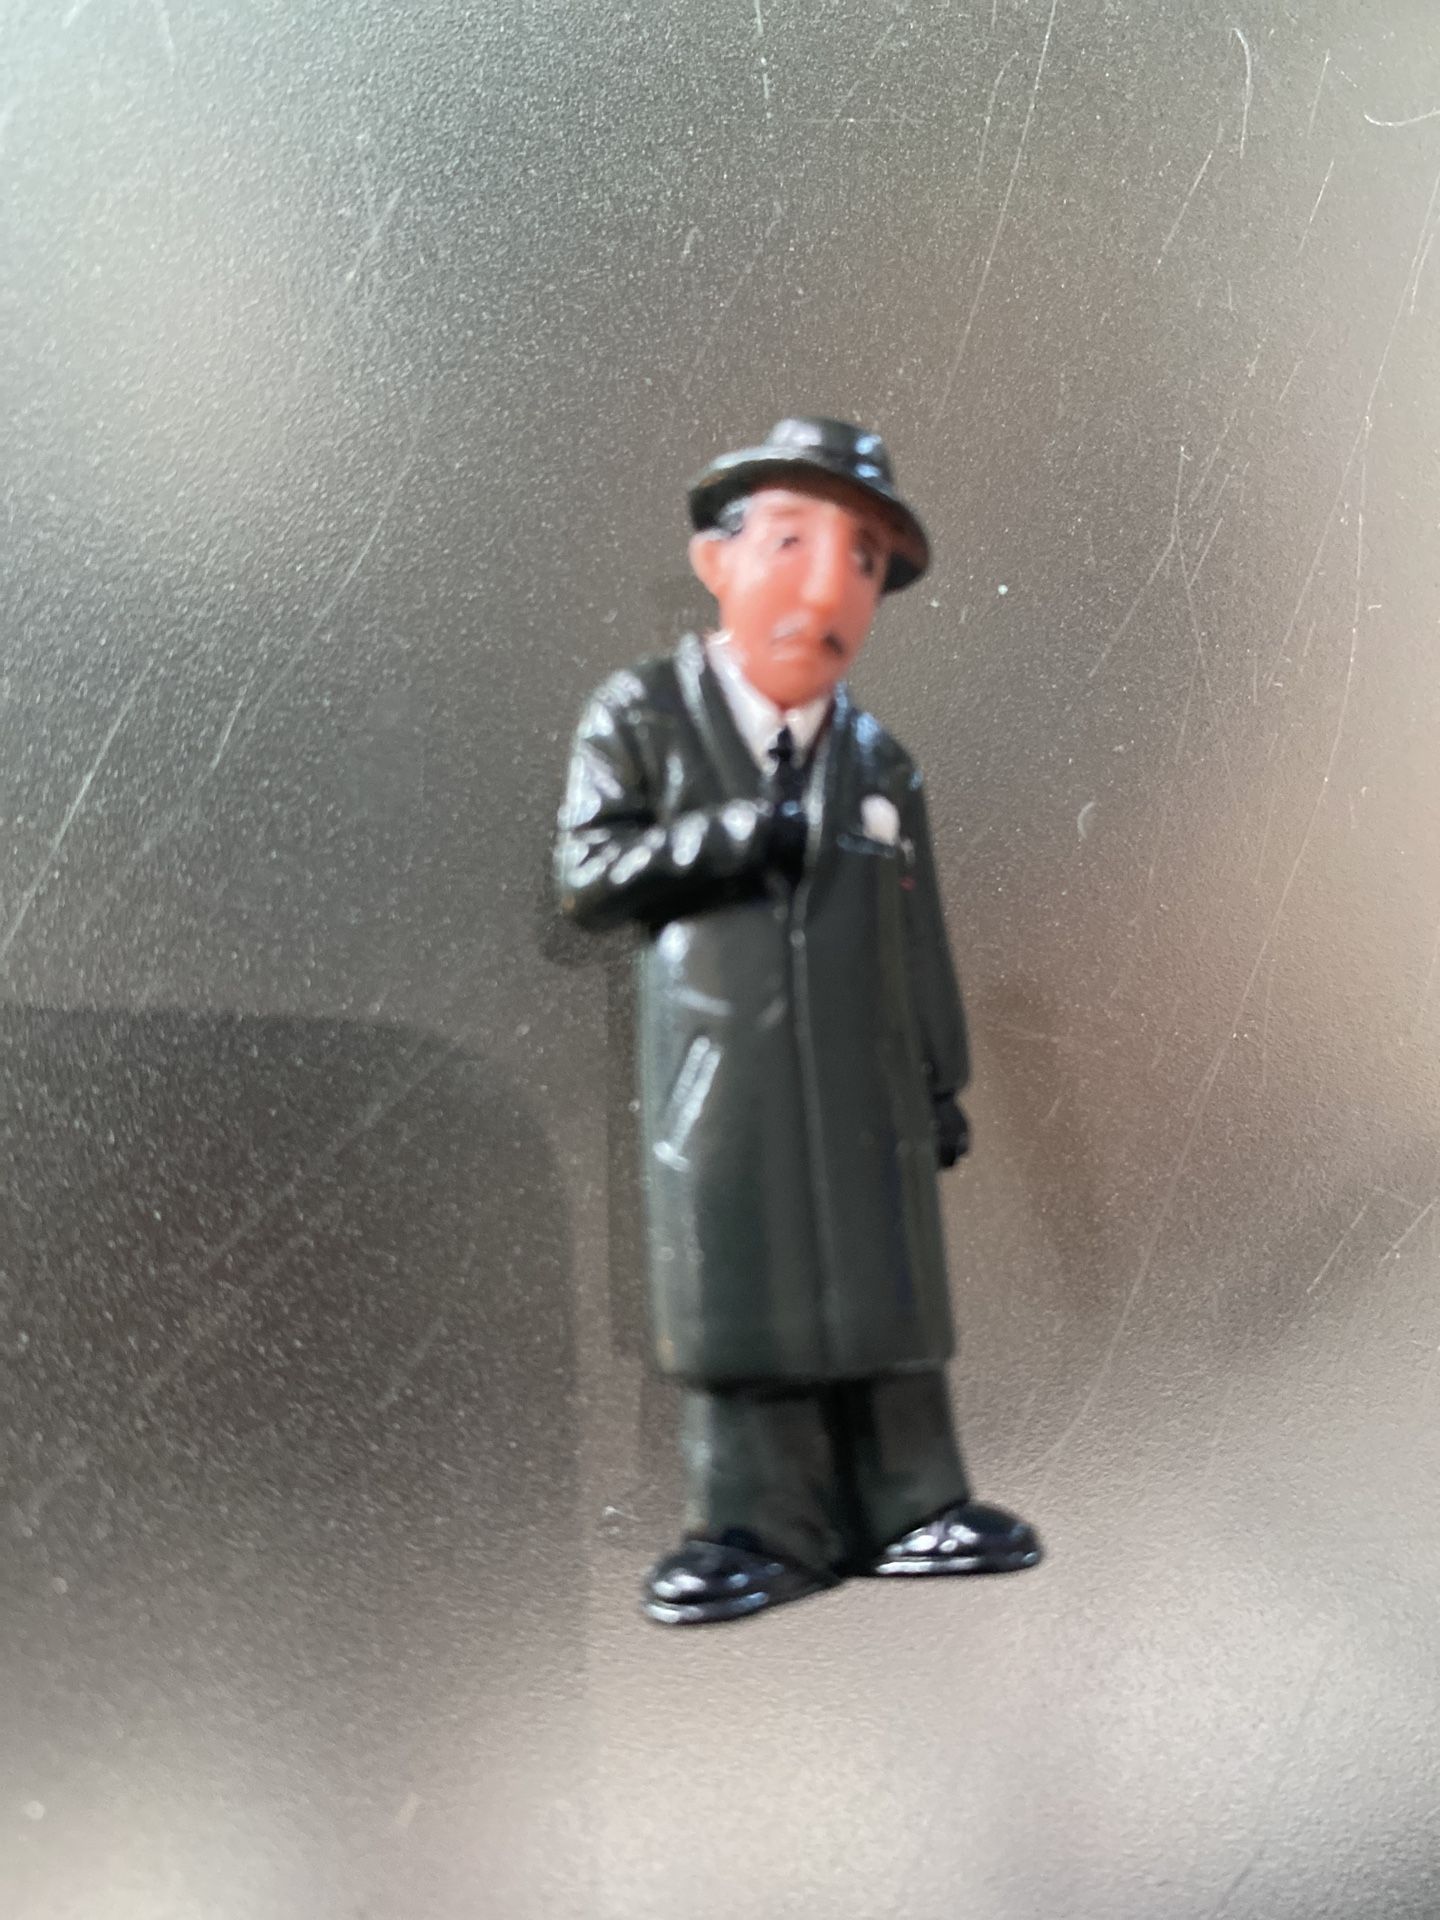 VTG Lil Homies Action Figure PVC Figurine Unknown Trench coat Hat Mustache 1.75”